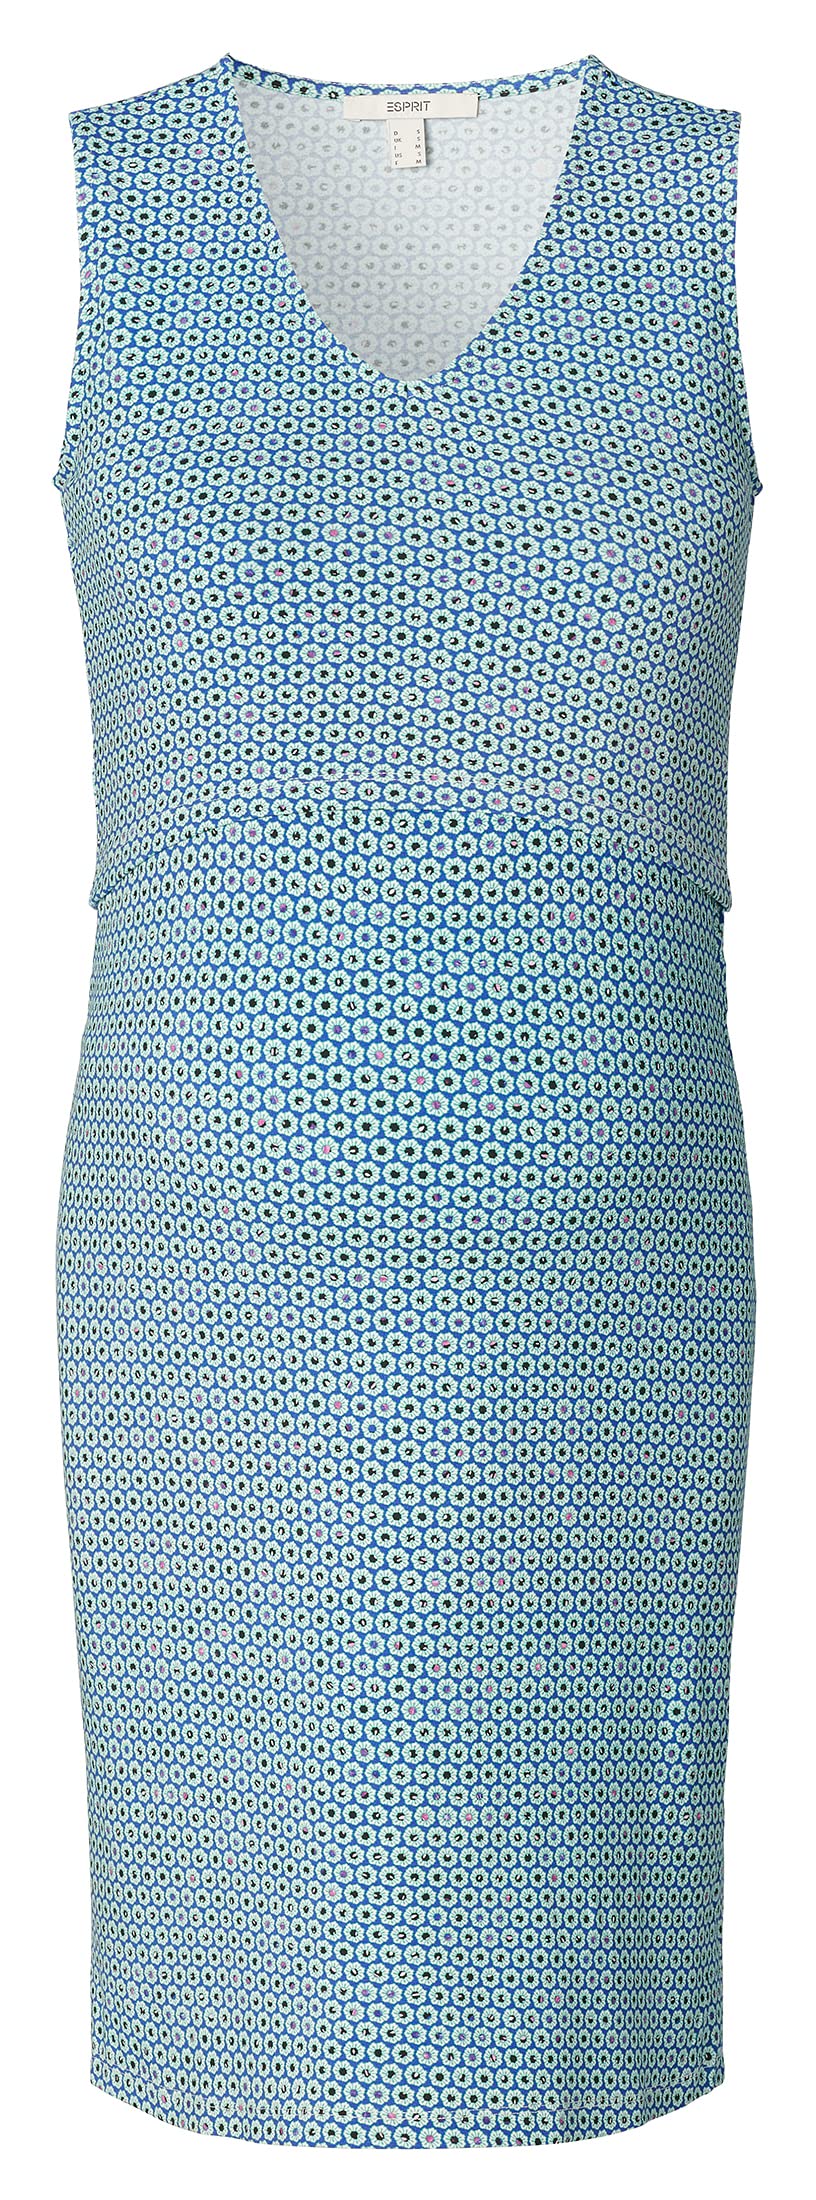 ESPRIT Damen Dress Nursing Sleeveless Allover Print Kleid, Pastel Blue-435, X-Large